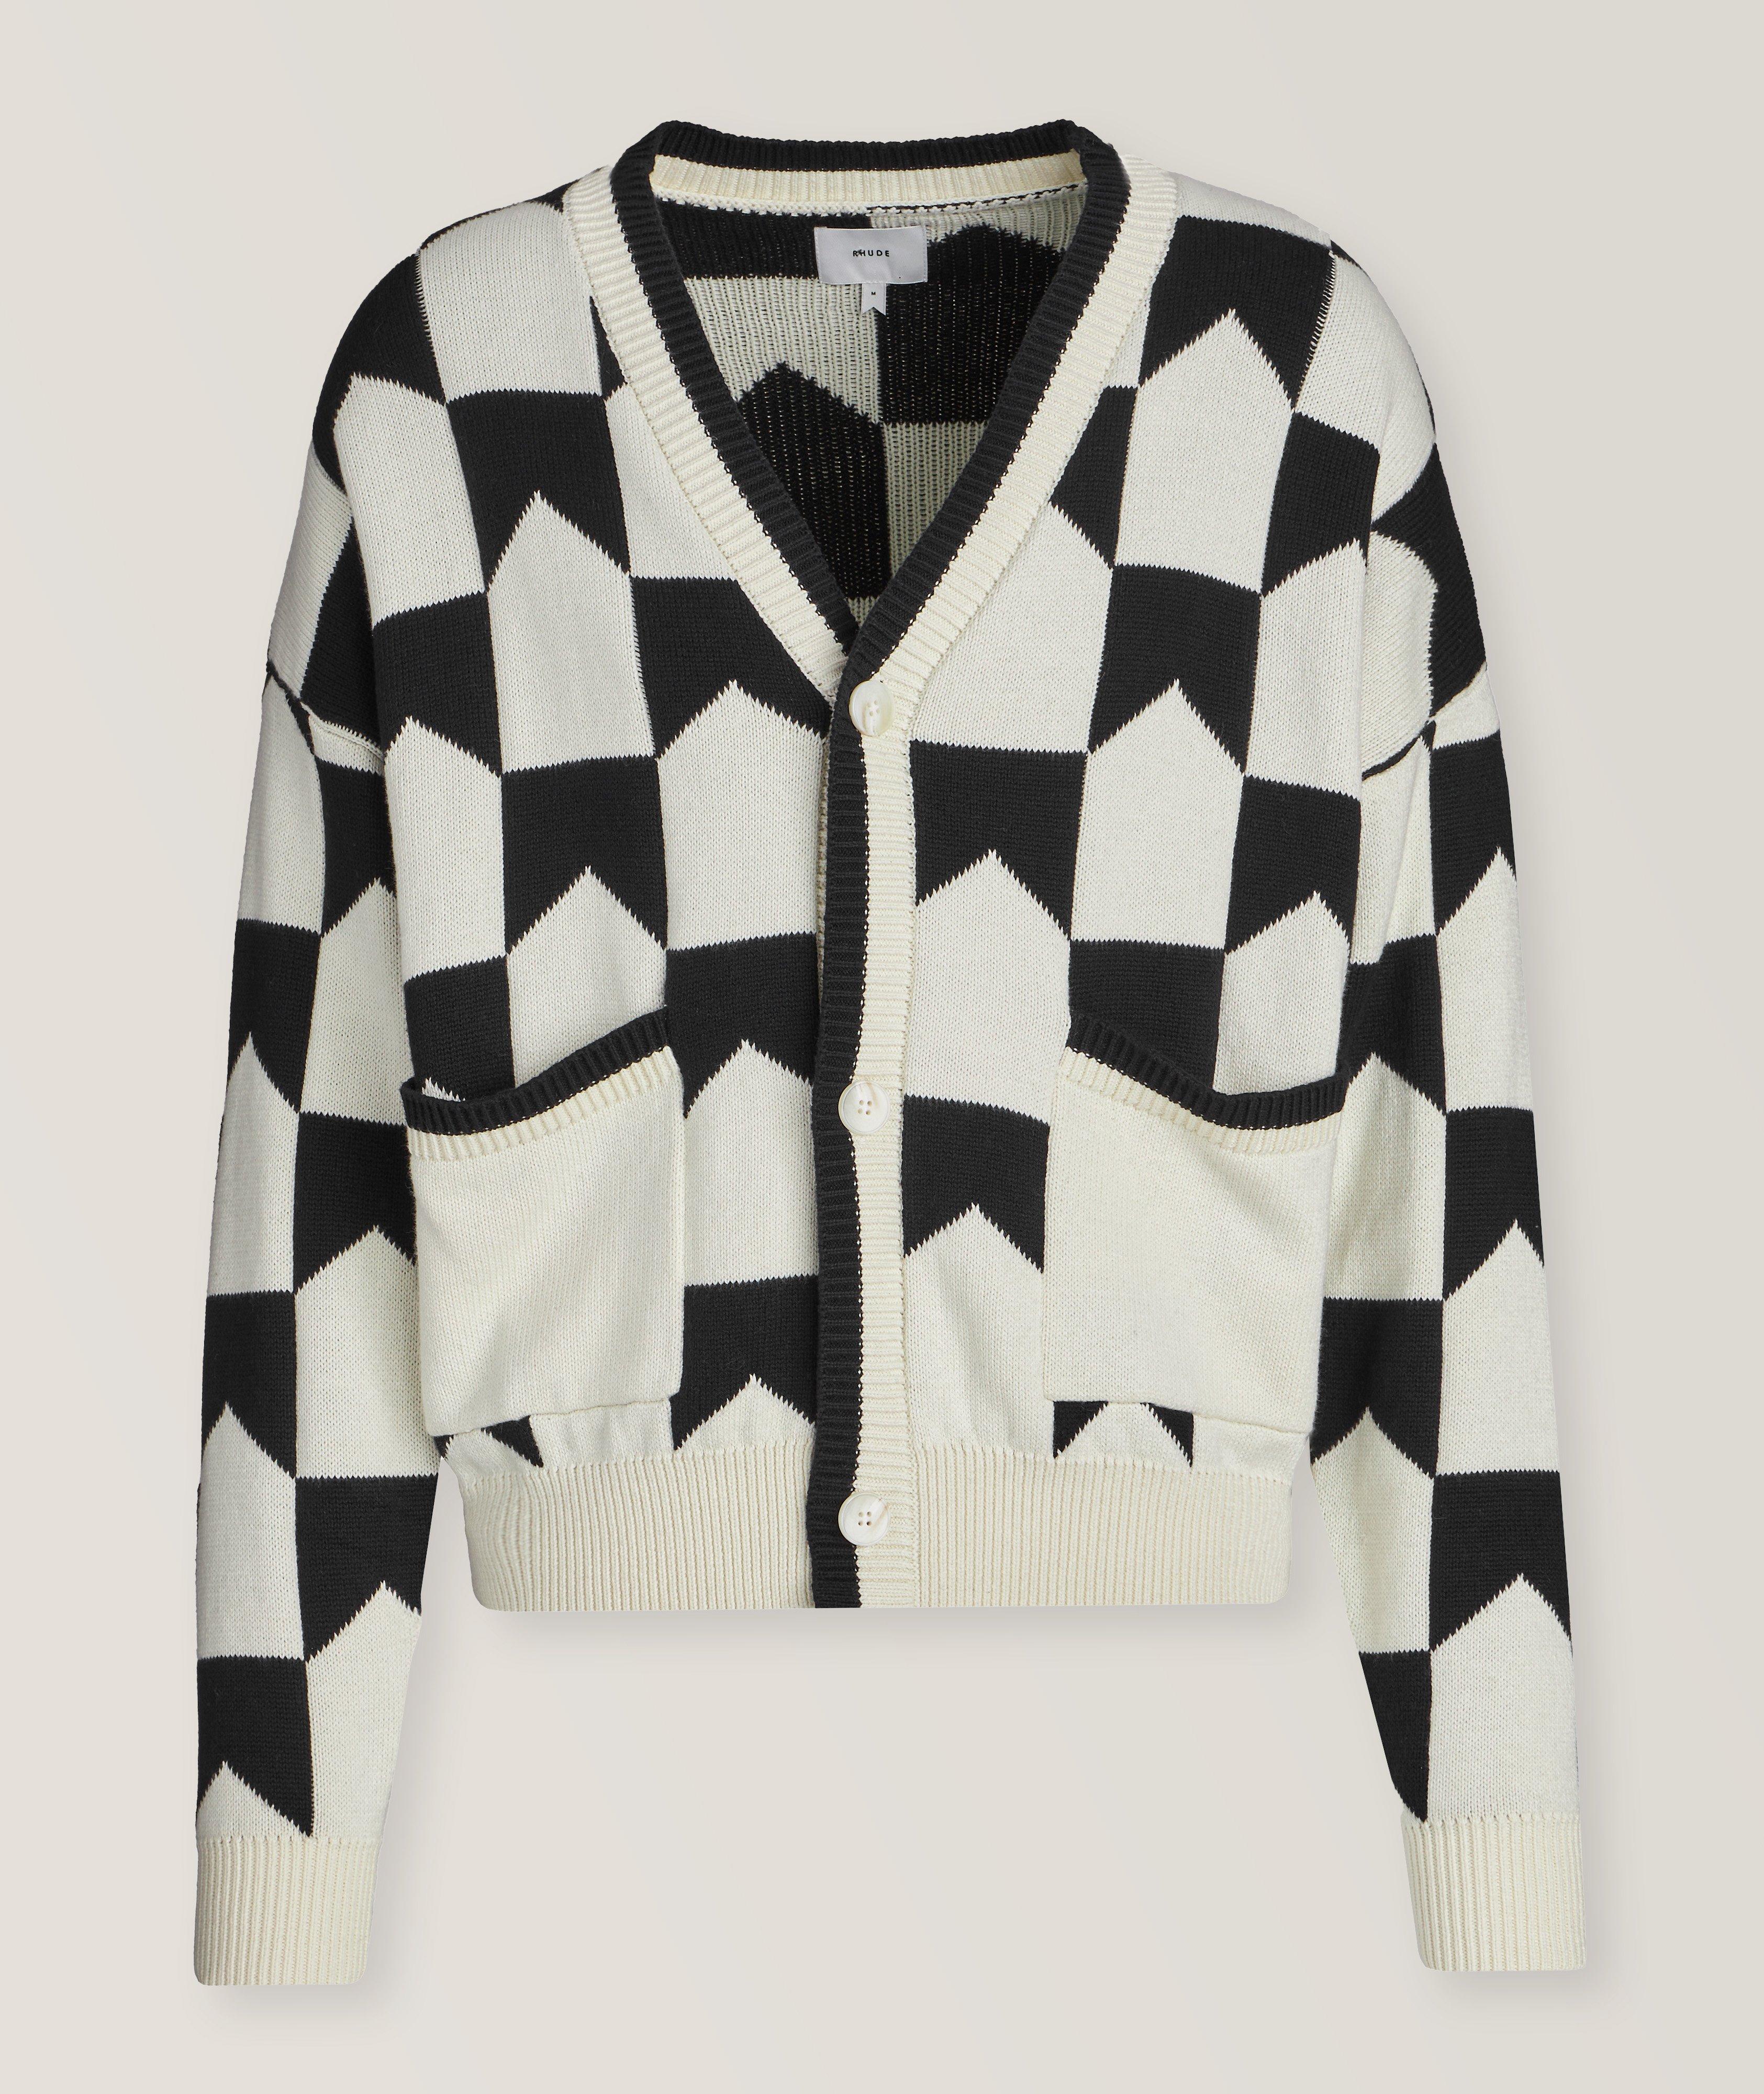 Chevron Checkered Cotton-Cashmere Knit Cardigan  image 0